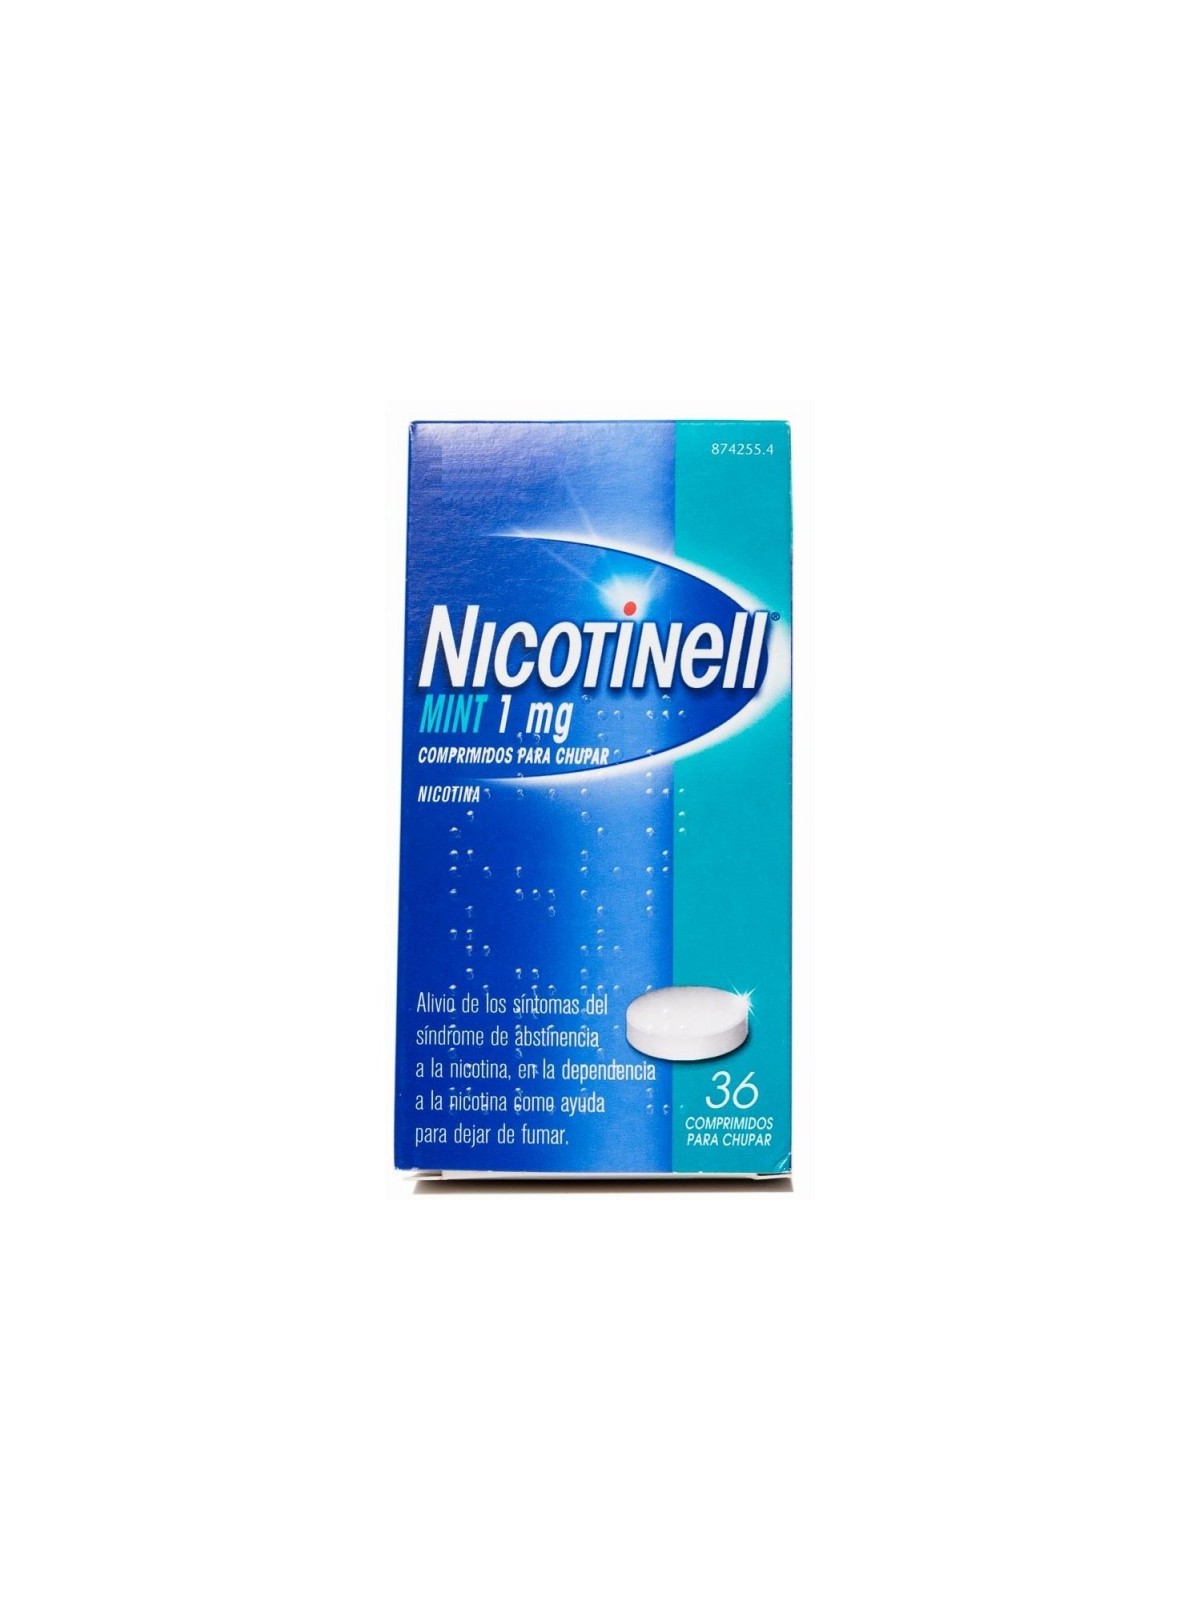 Nicotinell cool mint 4 mg 96 chicles: tratamiento para dejar de fumar.